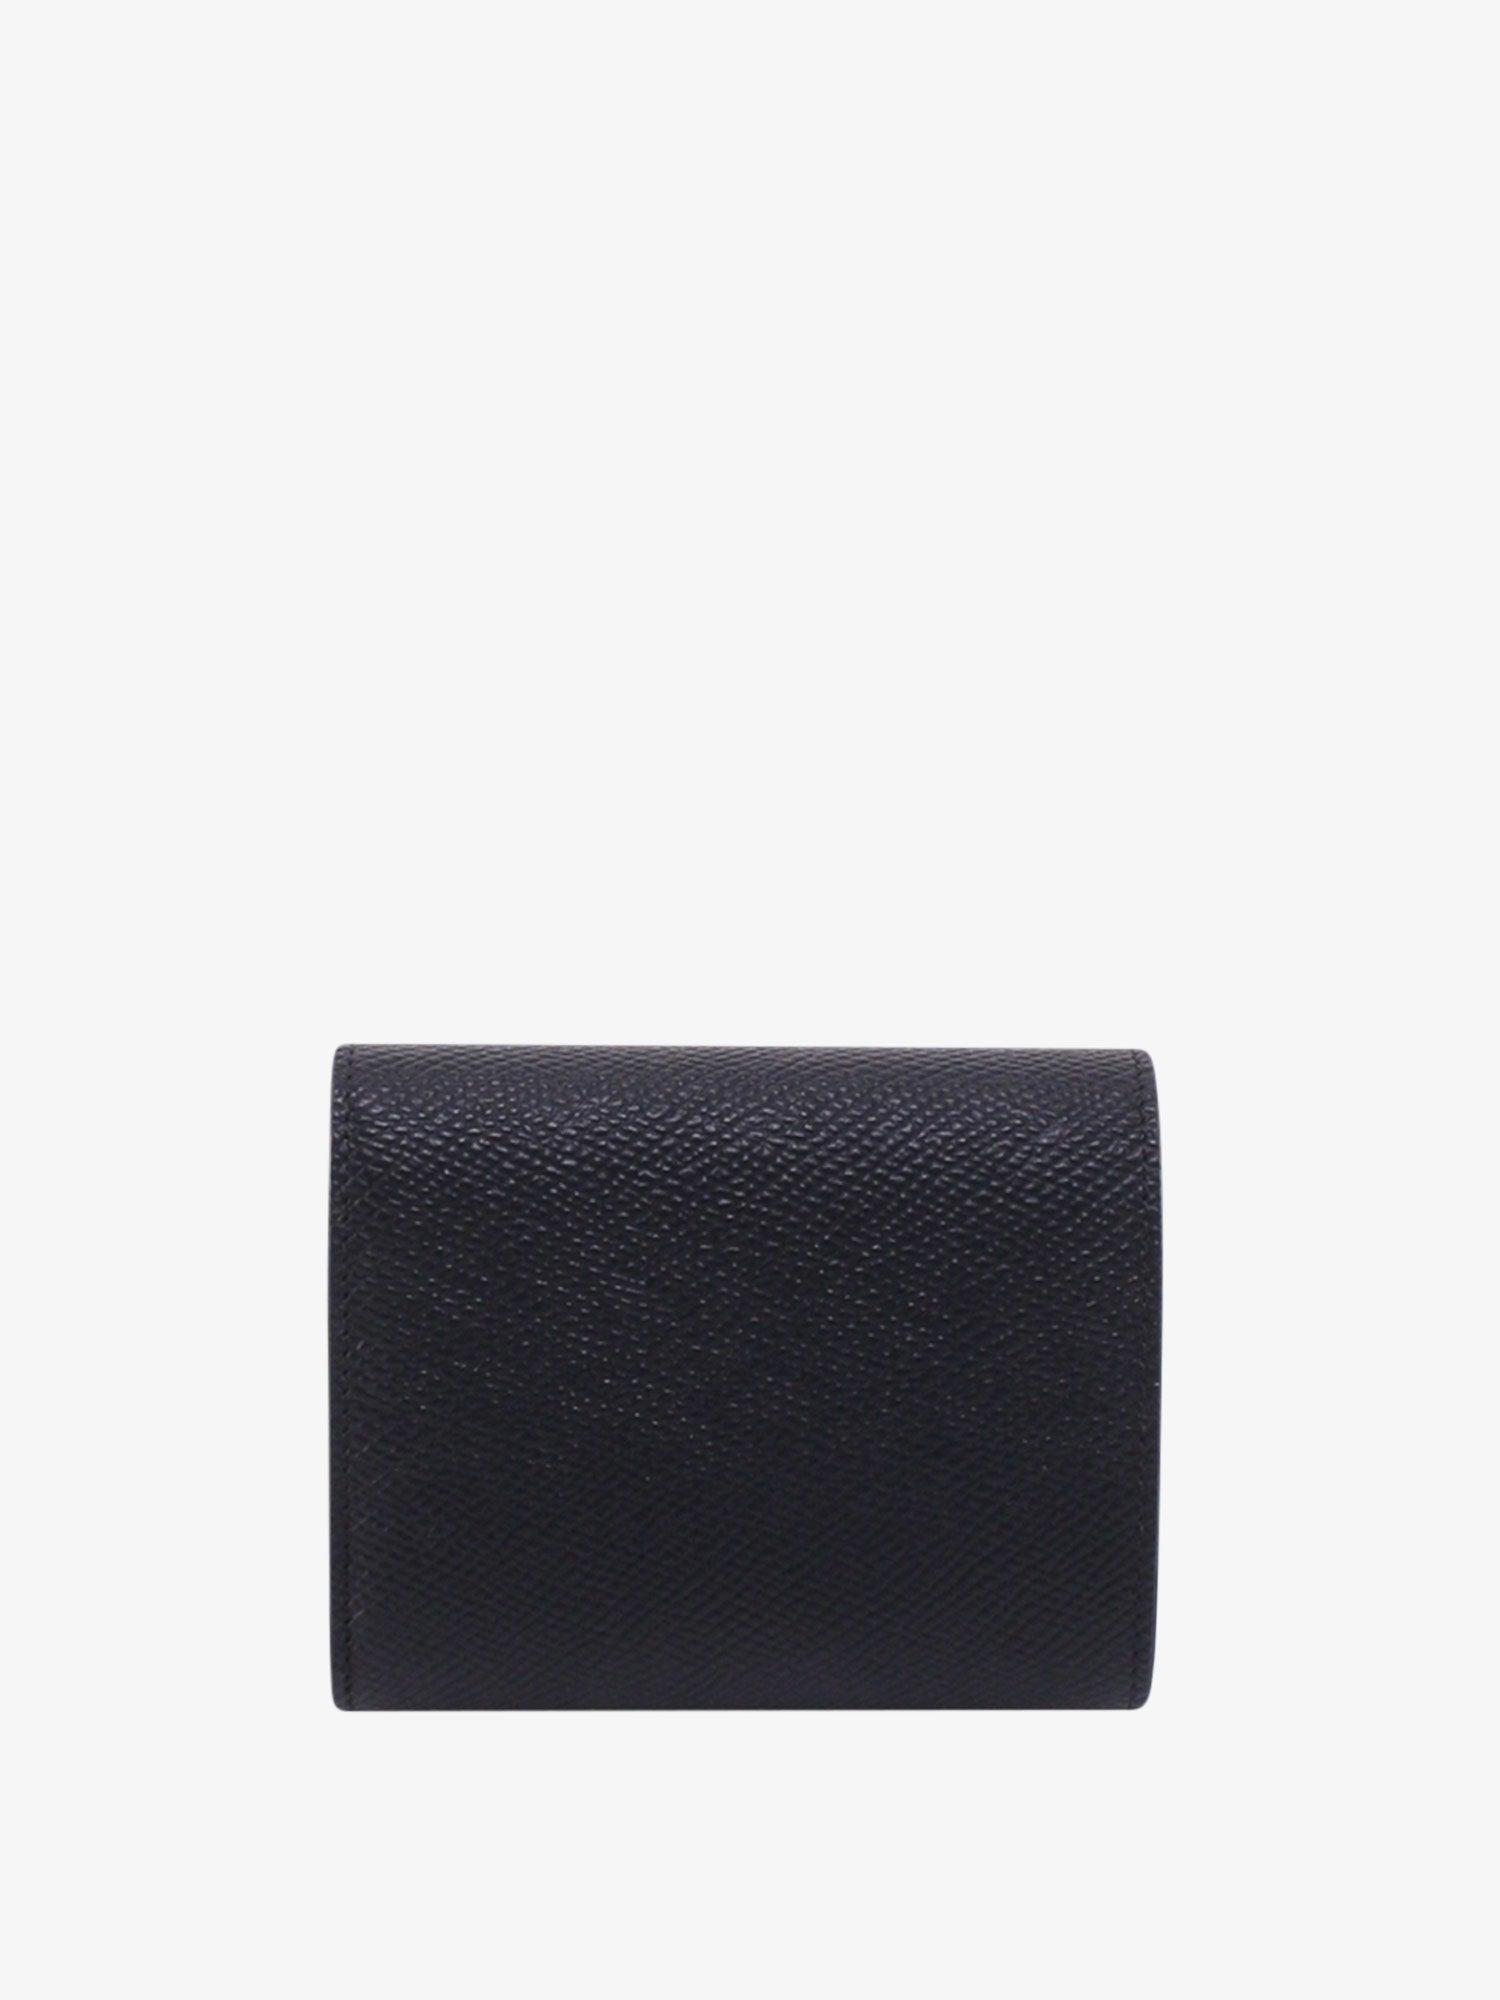 Neiman Marcus Intrecciato Weave Leather Wallet - Black Wallets